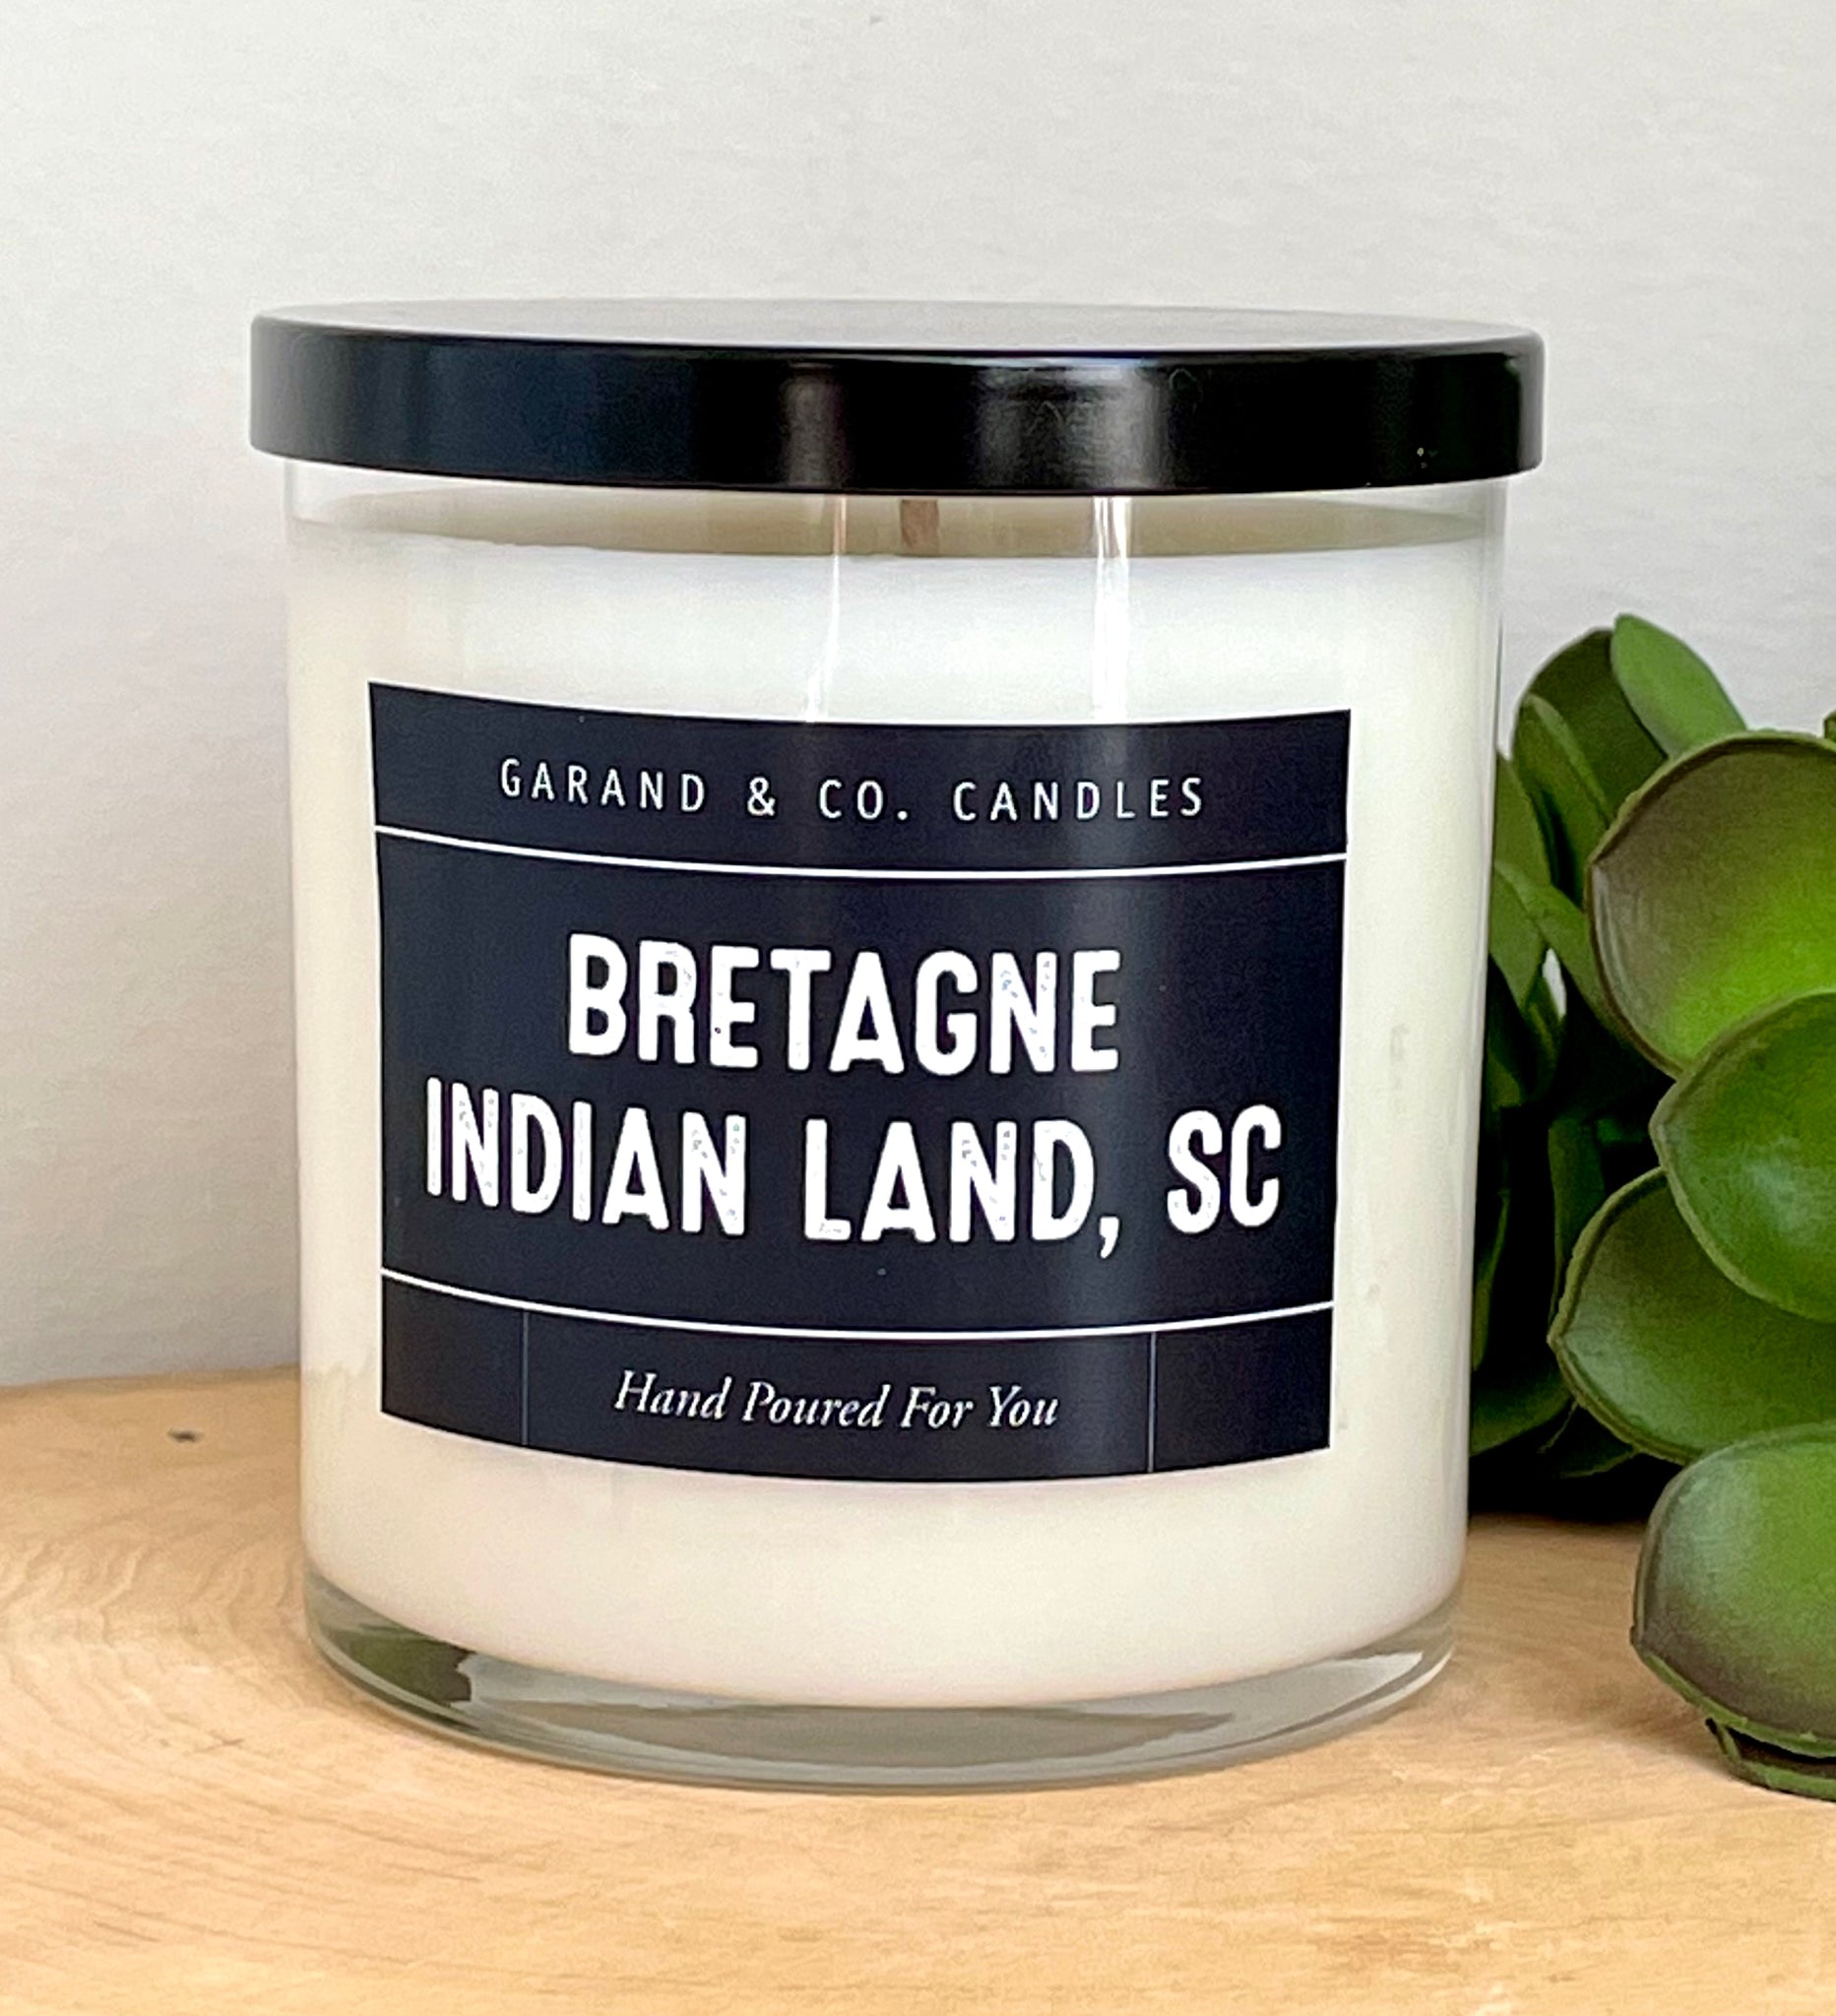 12 oz Clear Glass Jar Candle - Bretagne Indian Land, SC